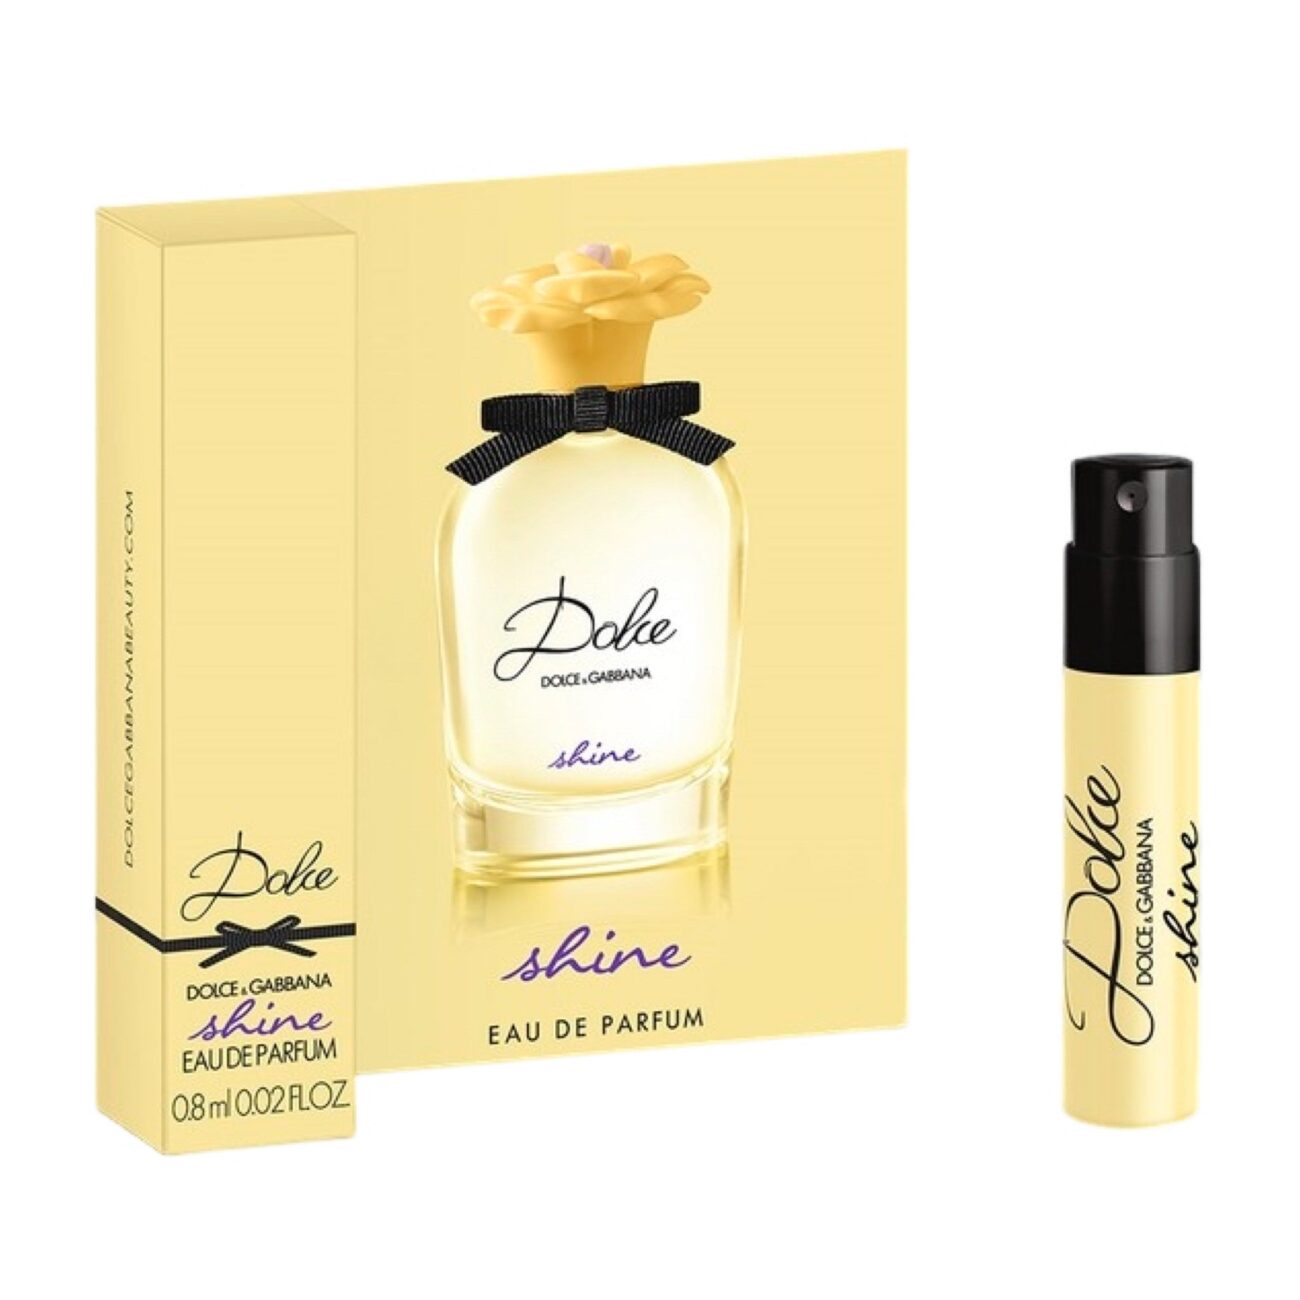 Dolce Shine Eau de Parfum Sample-Dolce & Gabbana